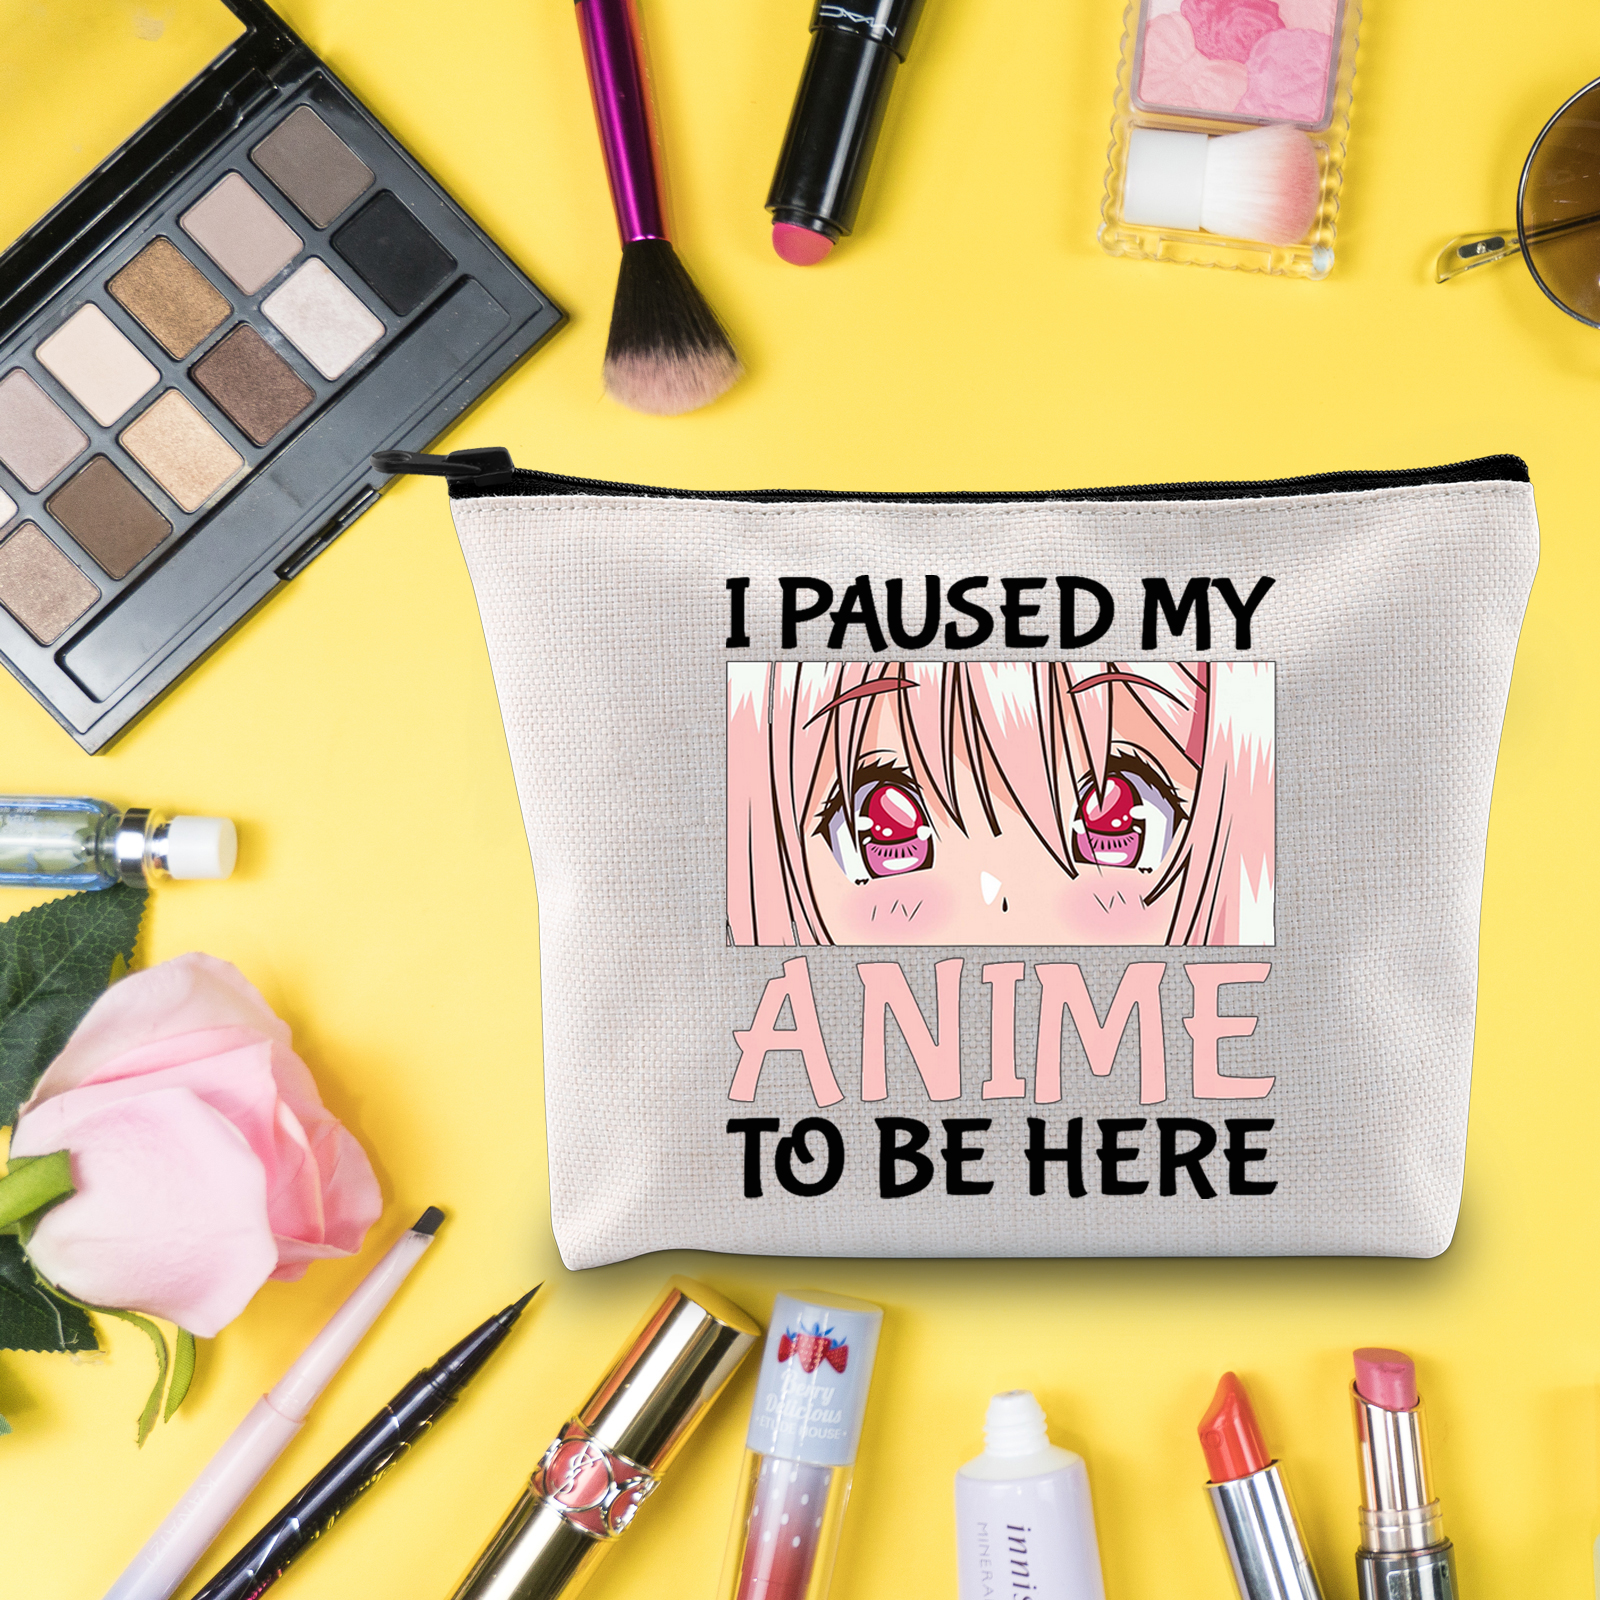  MBMSO Anime Lover Makeup Bag Anime Gifts for Manga Lovers Anime  Cosmetic Travel Bag Anime Fan Gift Makeup Pouch Anime Bag (Anime bag-black)  : Beauty & Personal Care